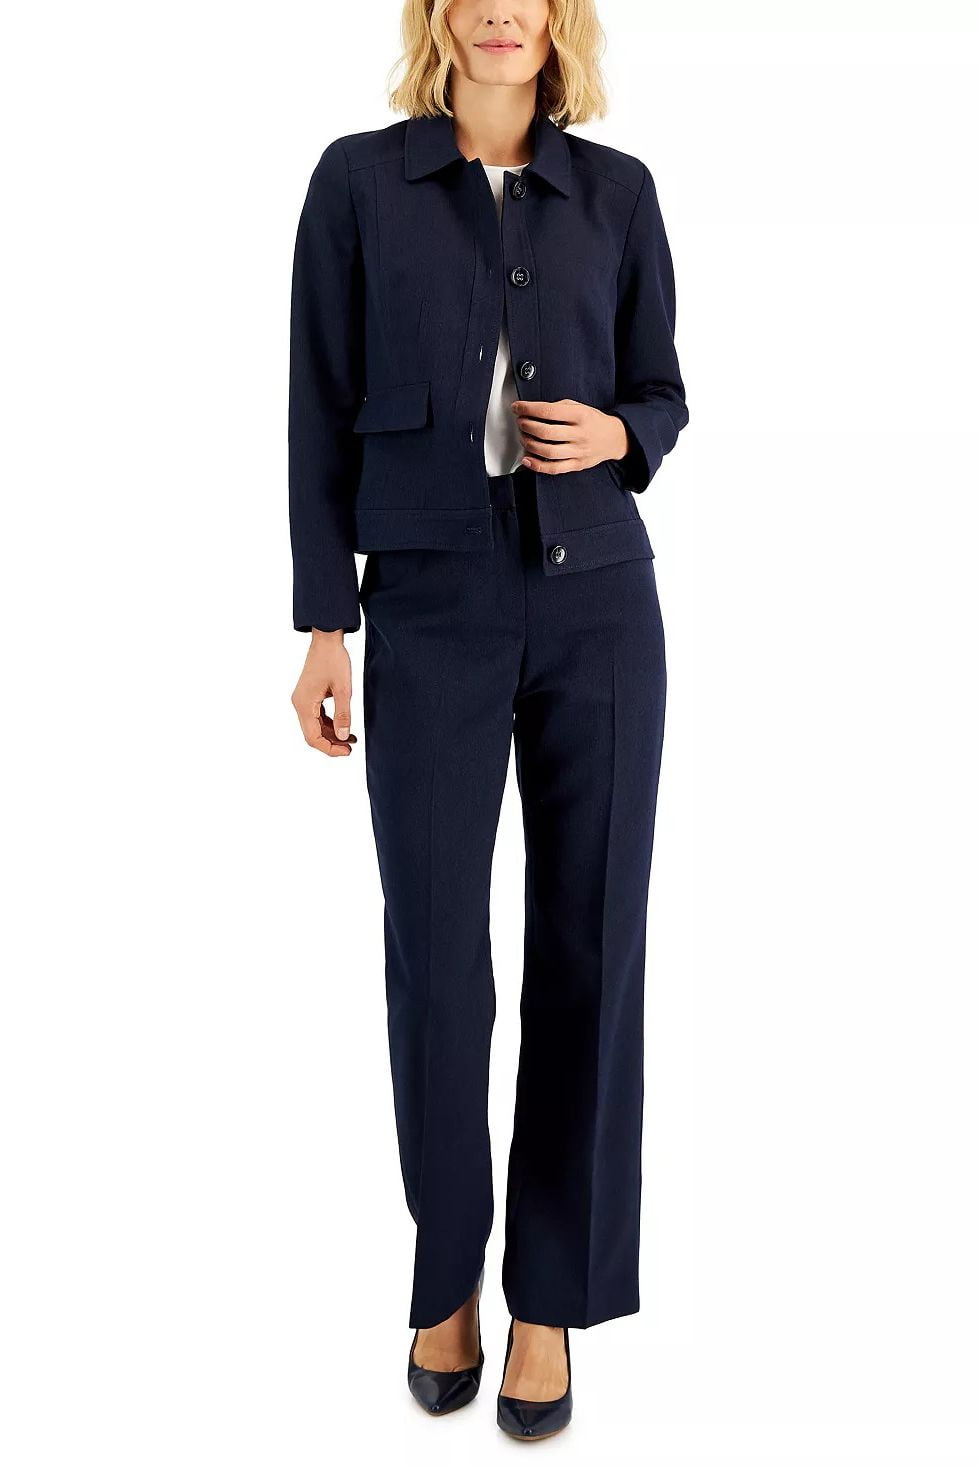 Women Wine Navy Blue Black Pant Suit Female V-Neck Formal Blazer Jacket and  Trouser 2 Piece Set For Office Ladies Work Wear - AliExpress